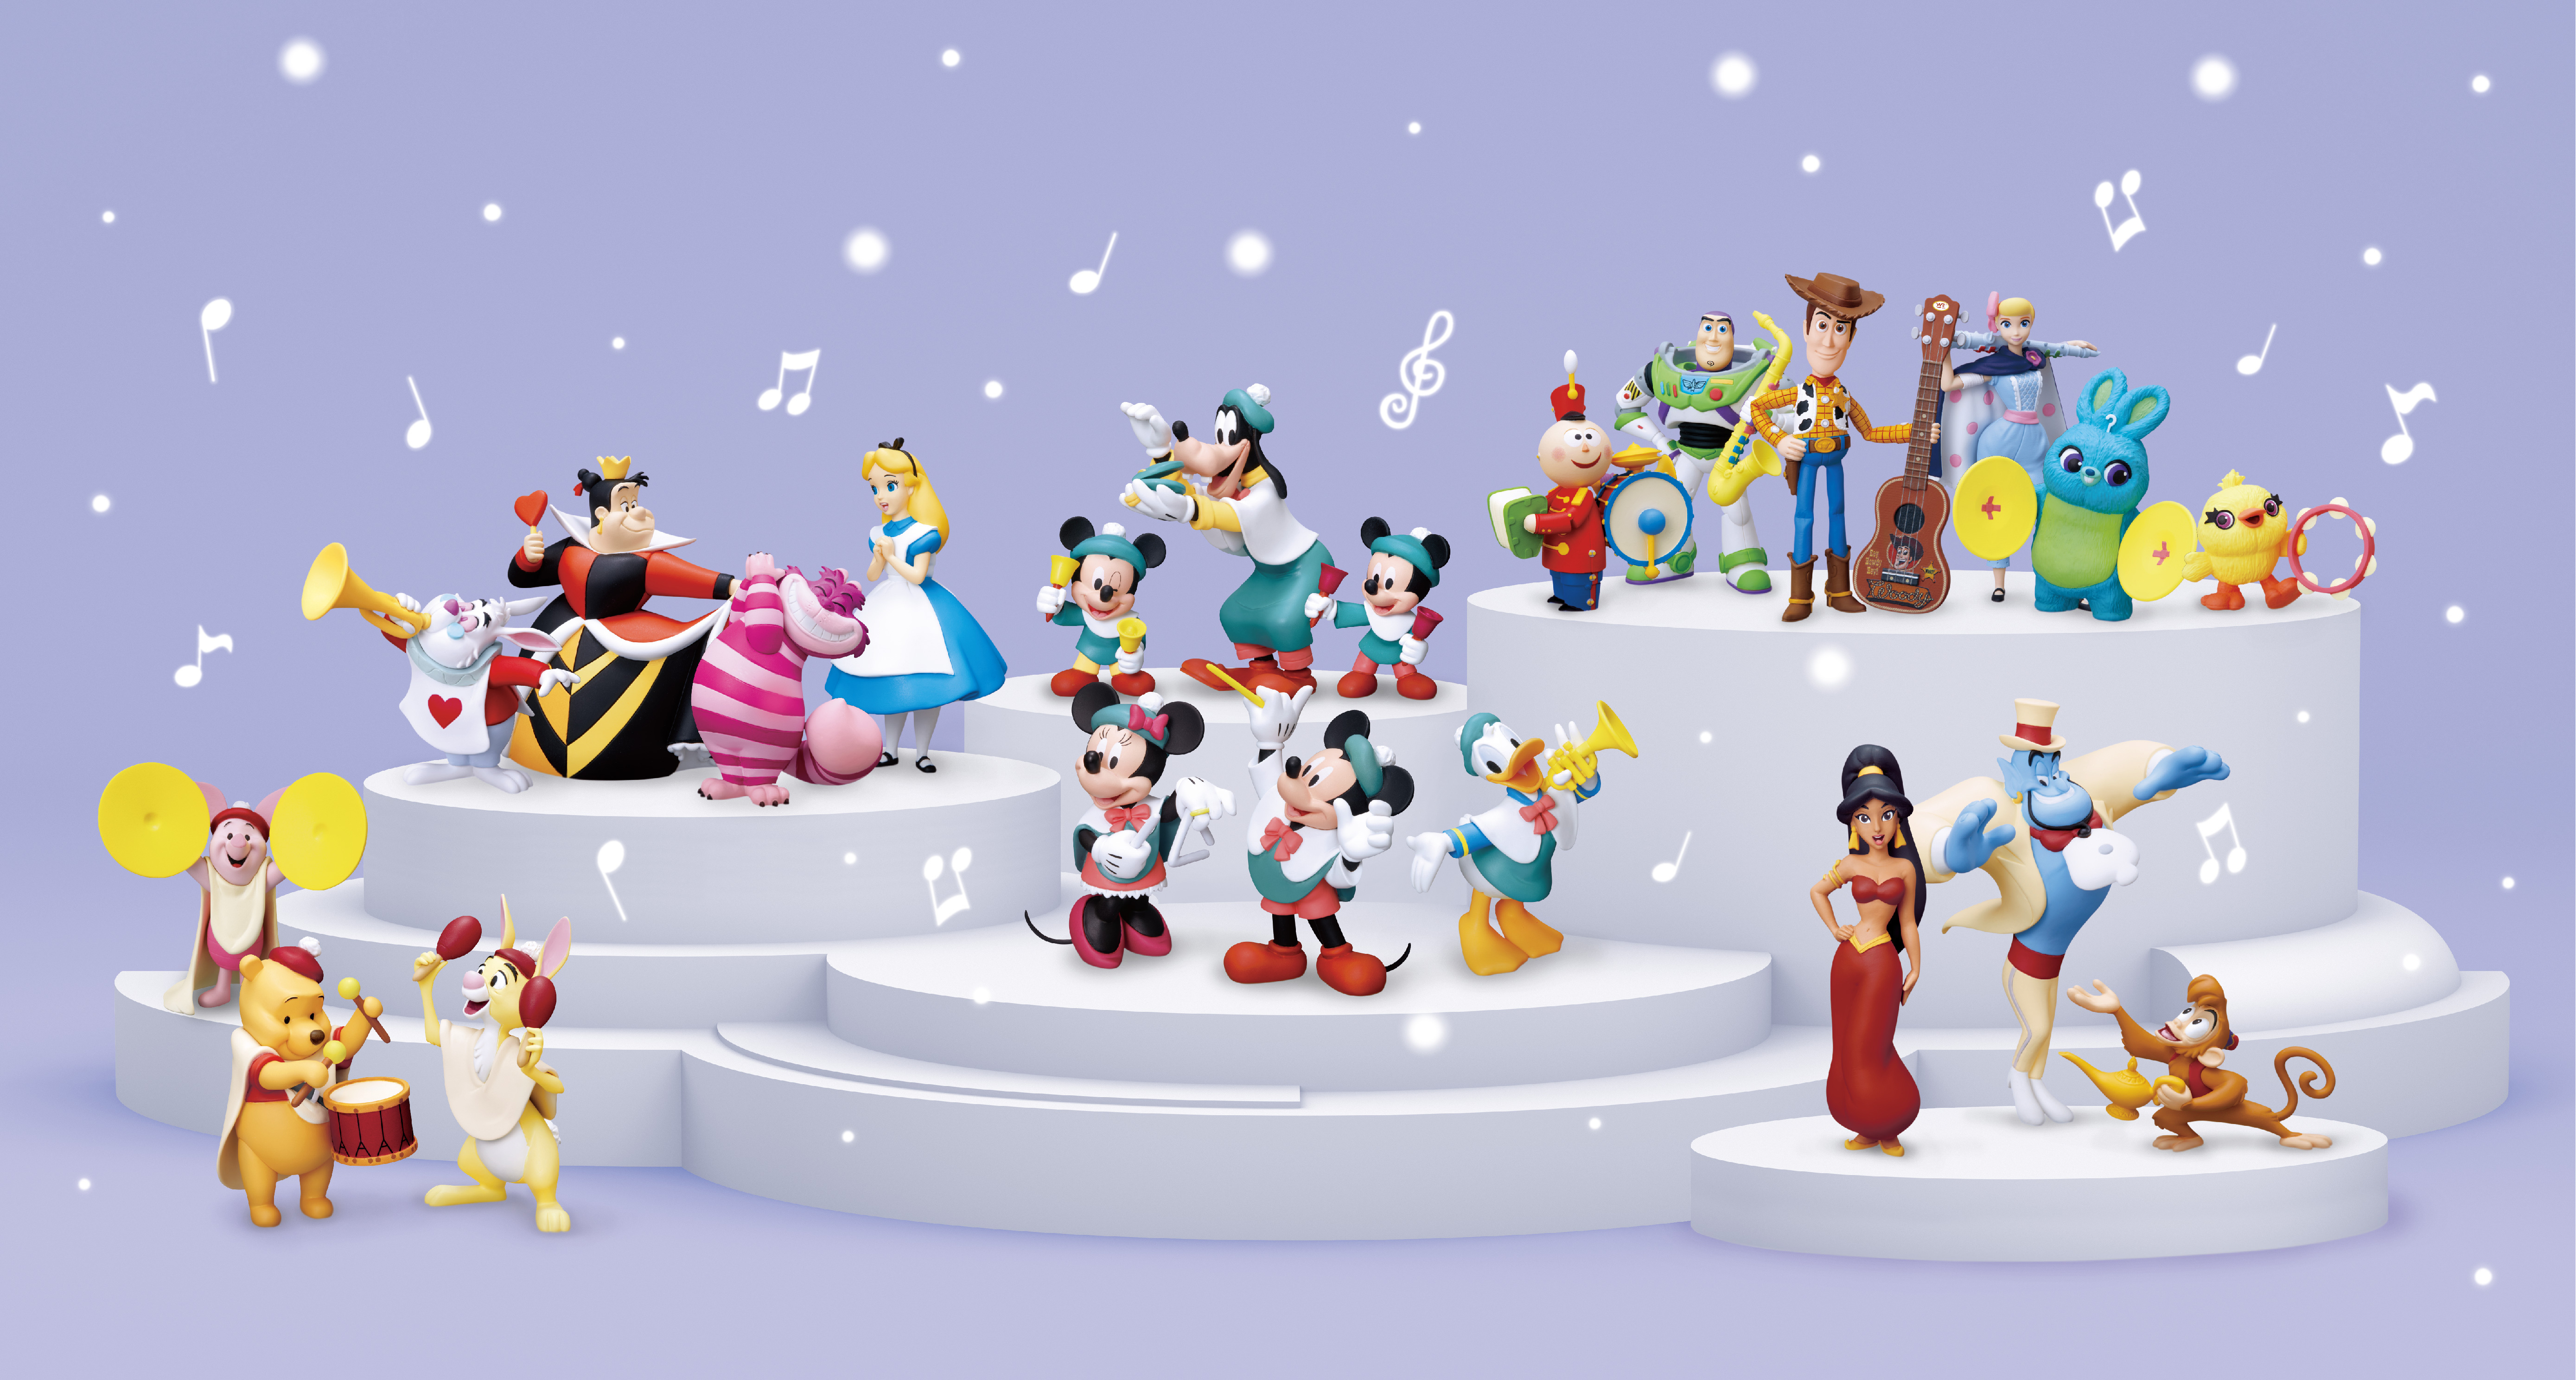 Happyくじ Disneyクリスマスオーナメント19 11月23日 土 発売開始 株式会社サニーサイドアップのプレスリリース